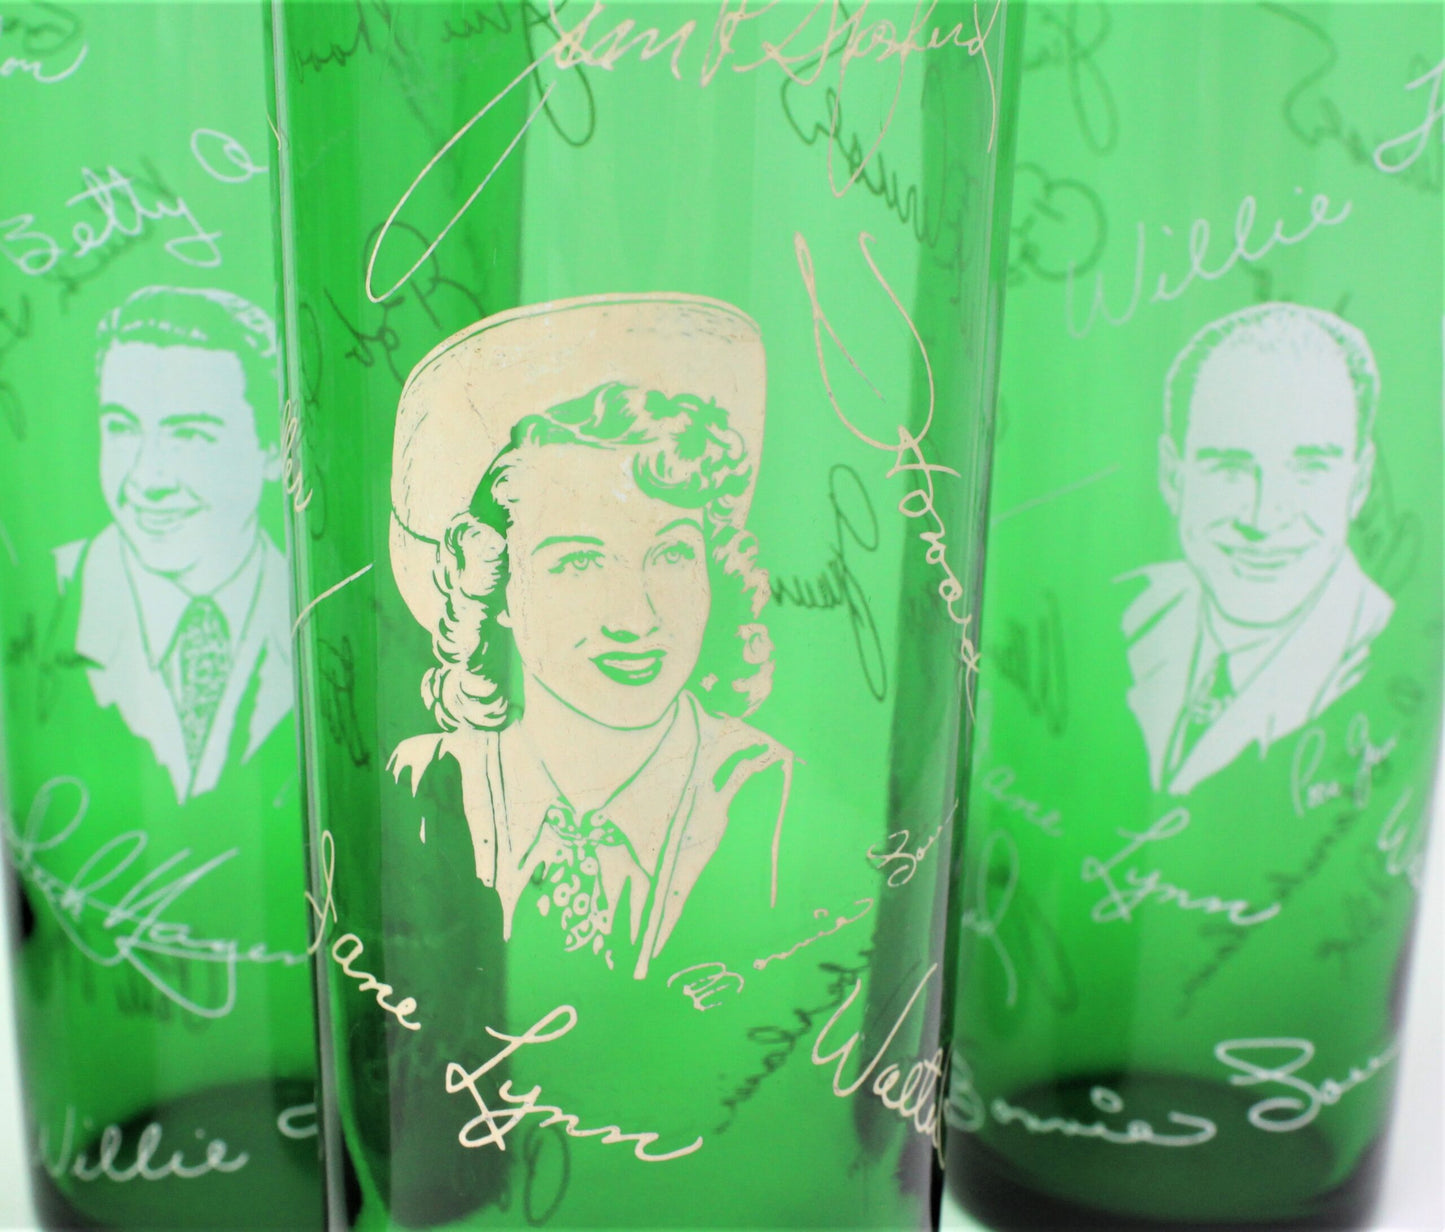 Glasses, Cocktail / Highball, Midwestern Hayride, Pyroglaze Green Glass, Set of 8, Vintage